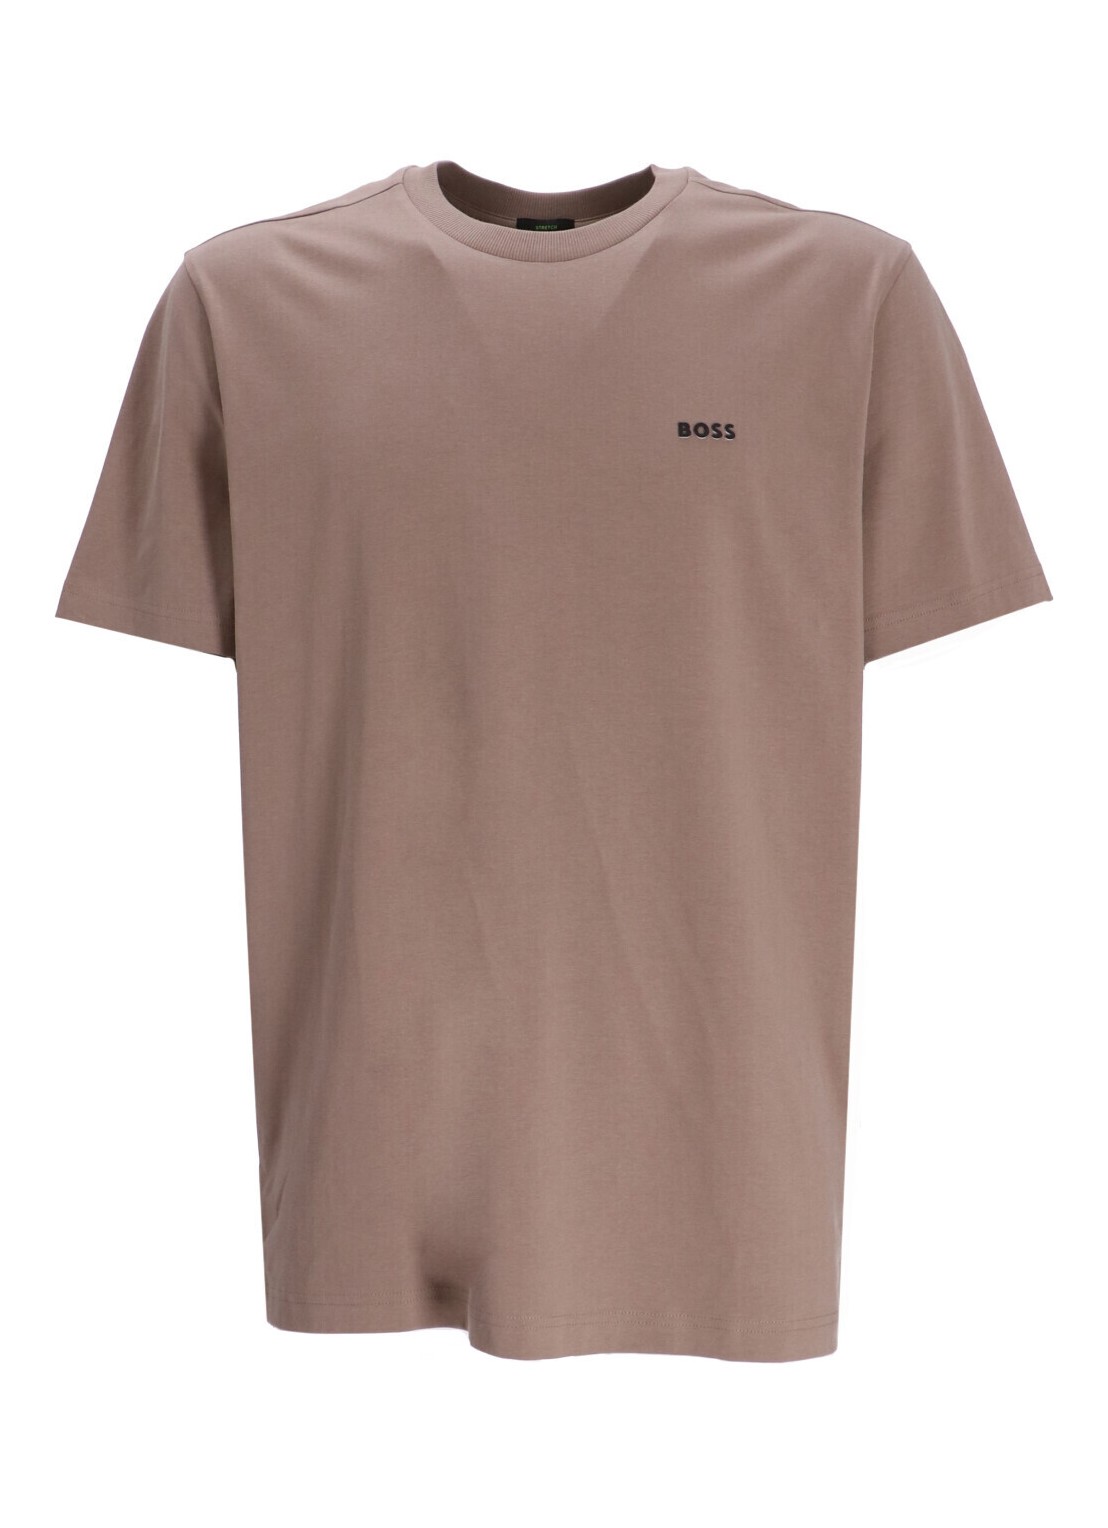 Camiseta boss t-shirt mantee - 50506373 334 talla marron
 